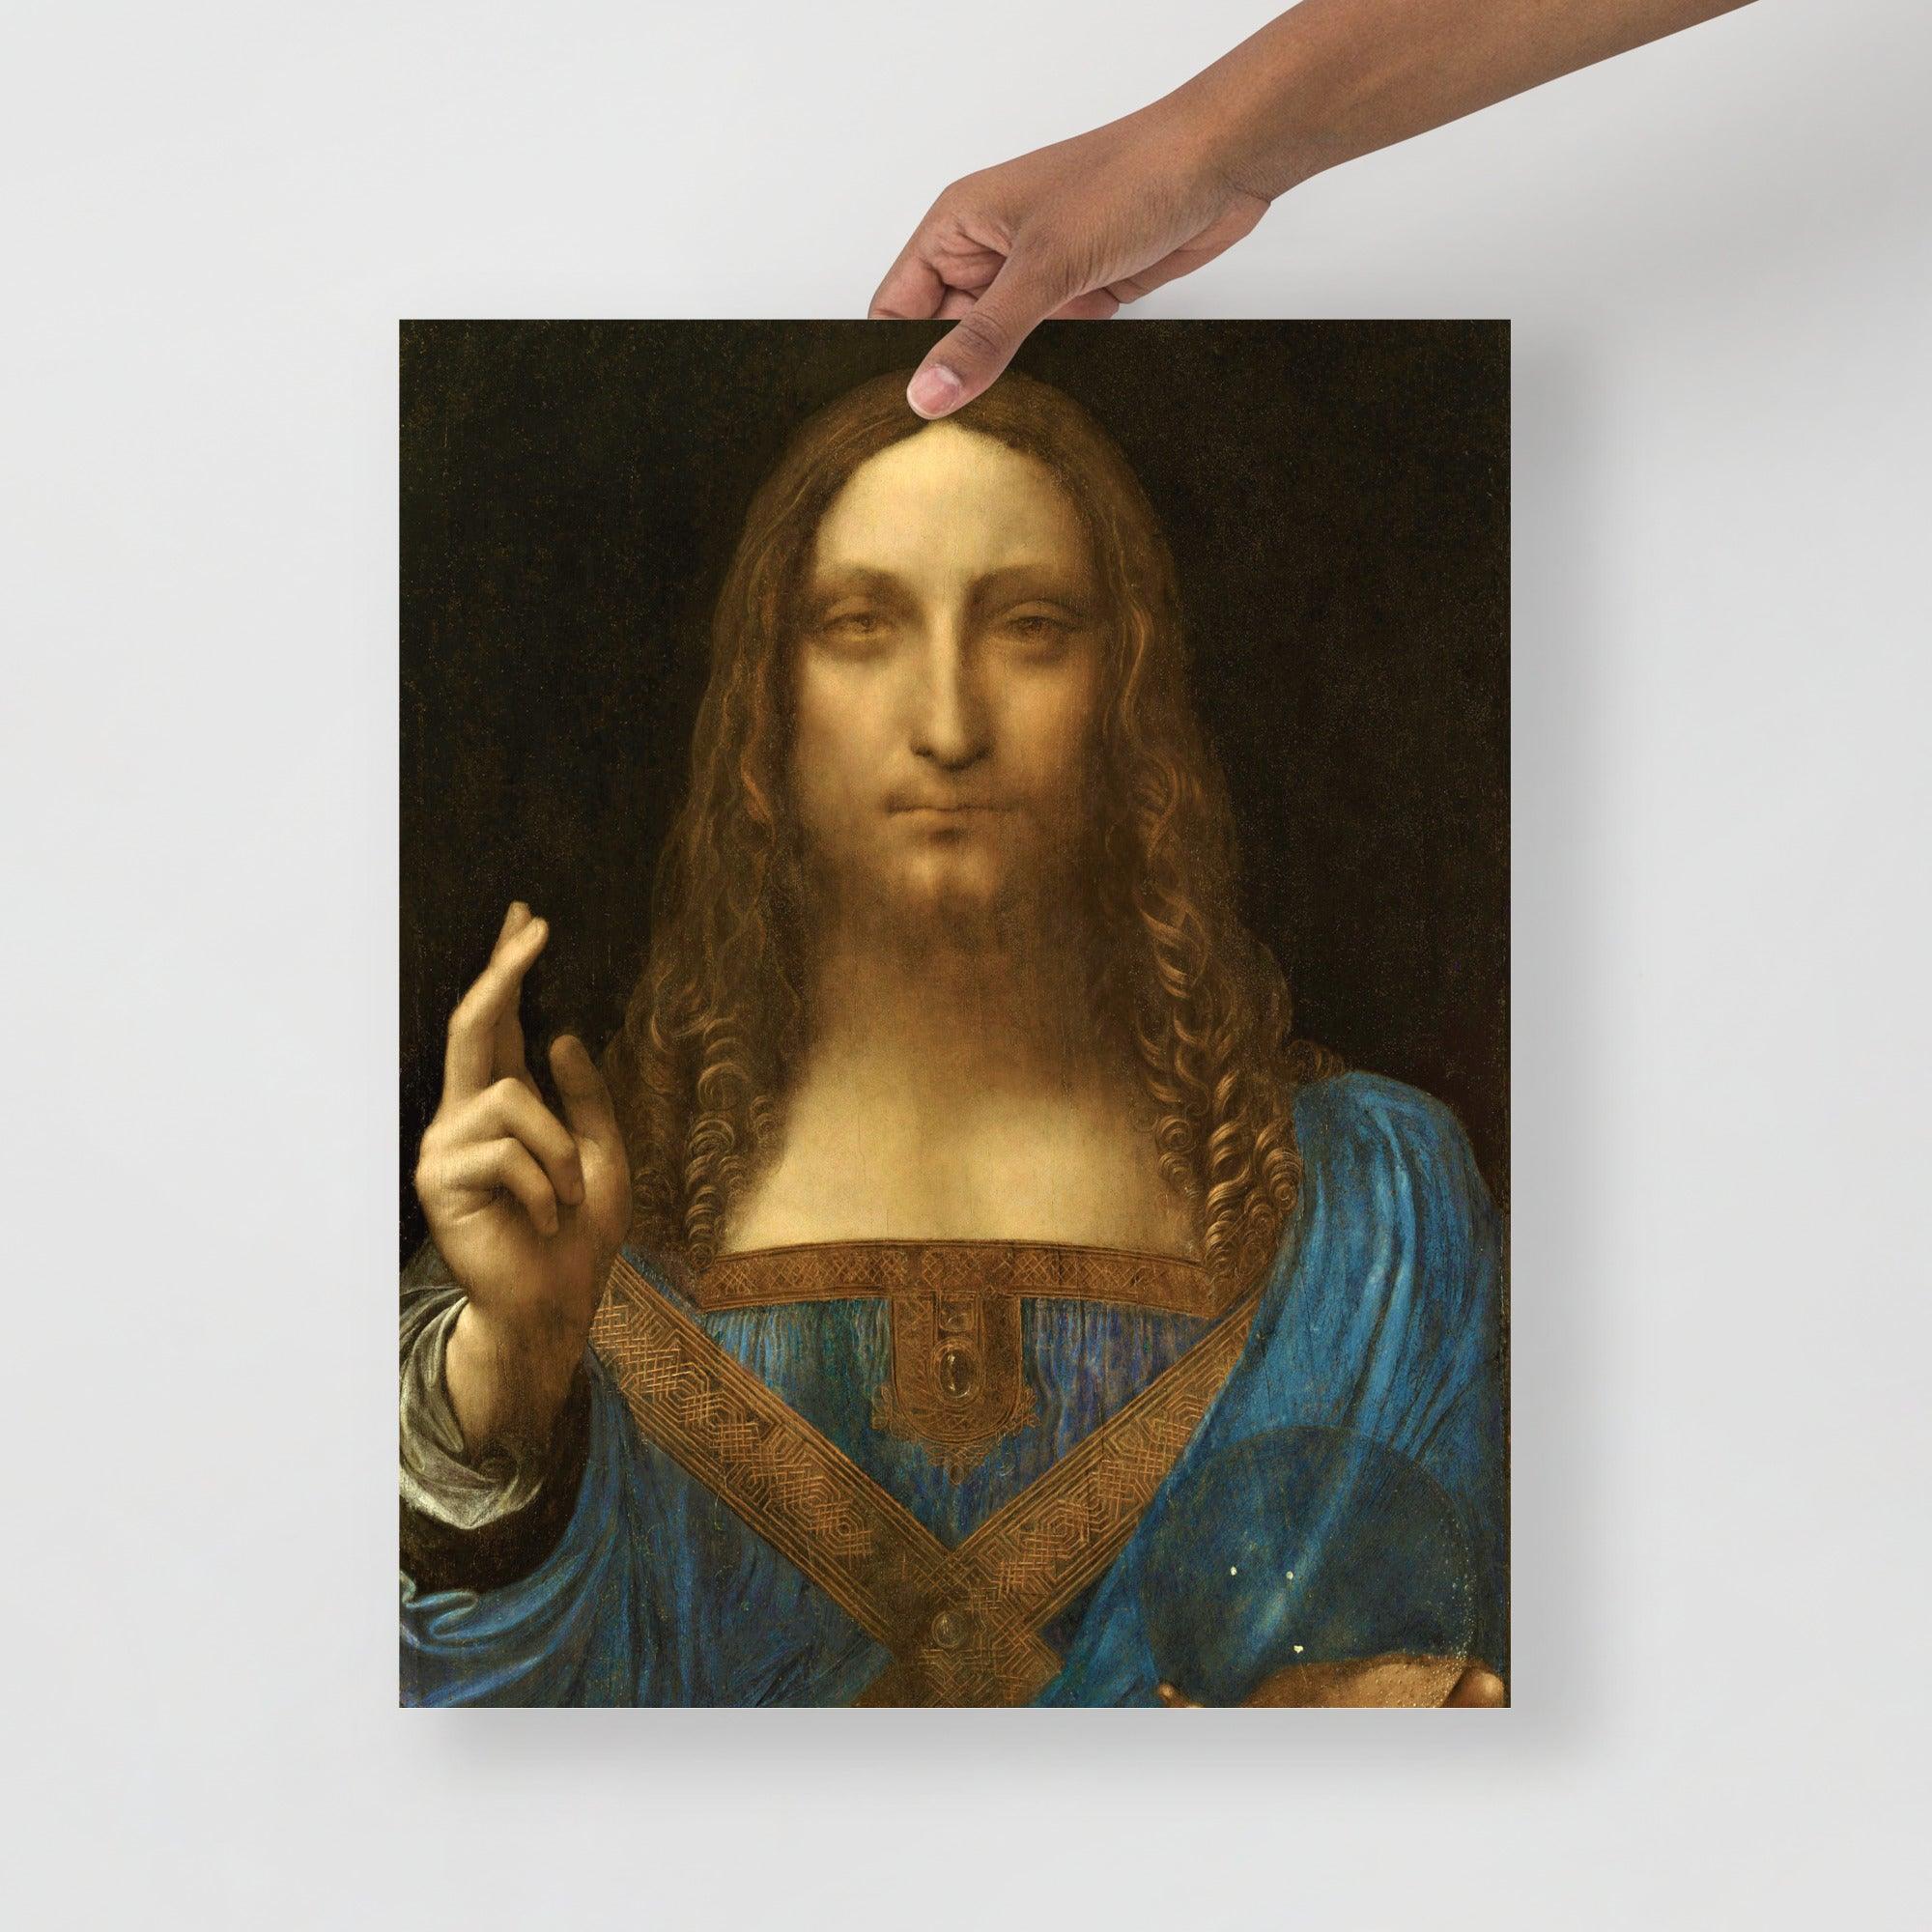 A Salvator Mundi by Leonardo Da Vinci poster on a plain backdrop in size 16x20”.